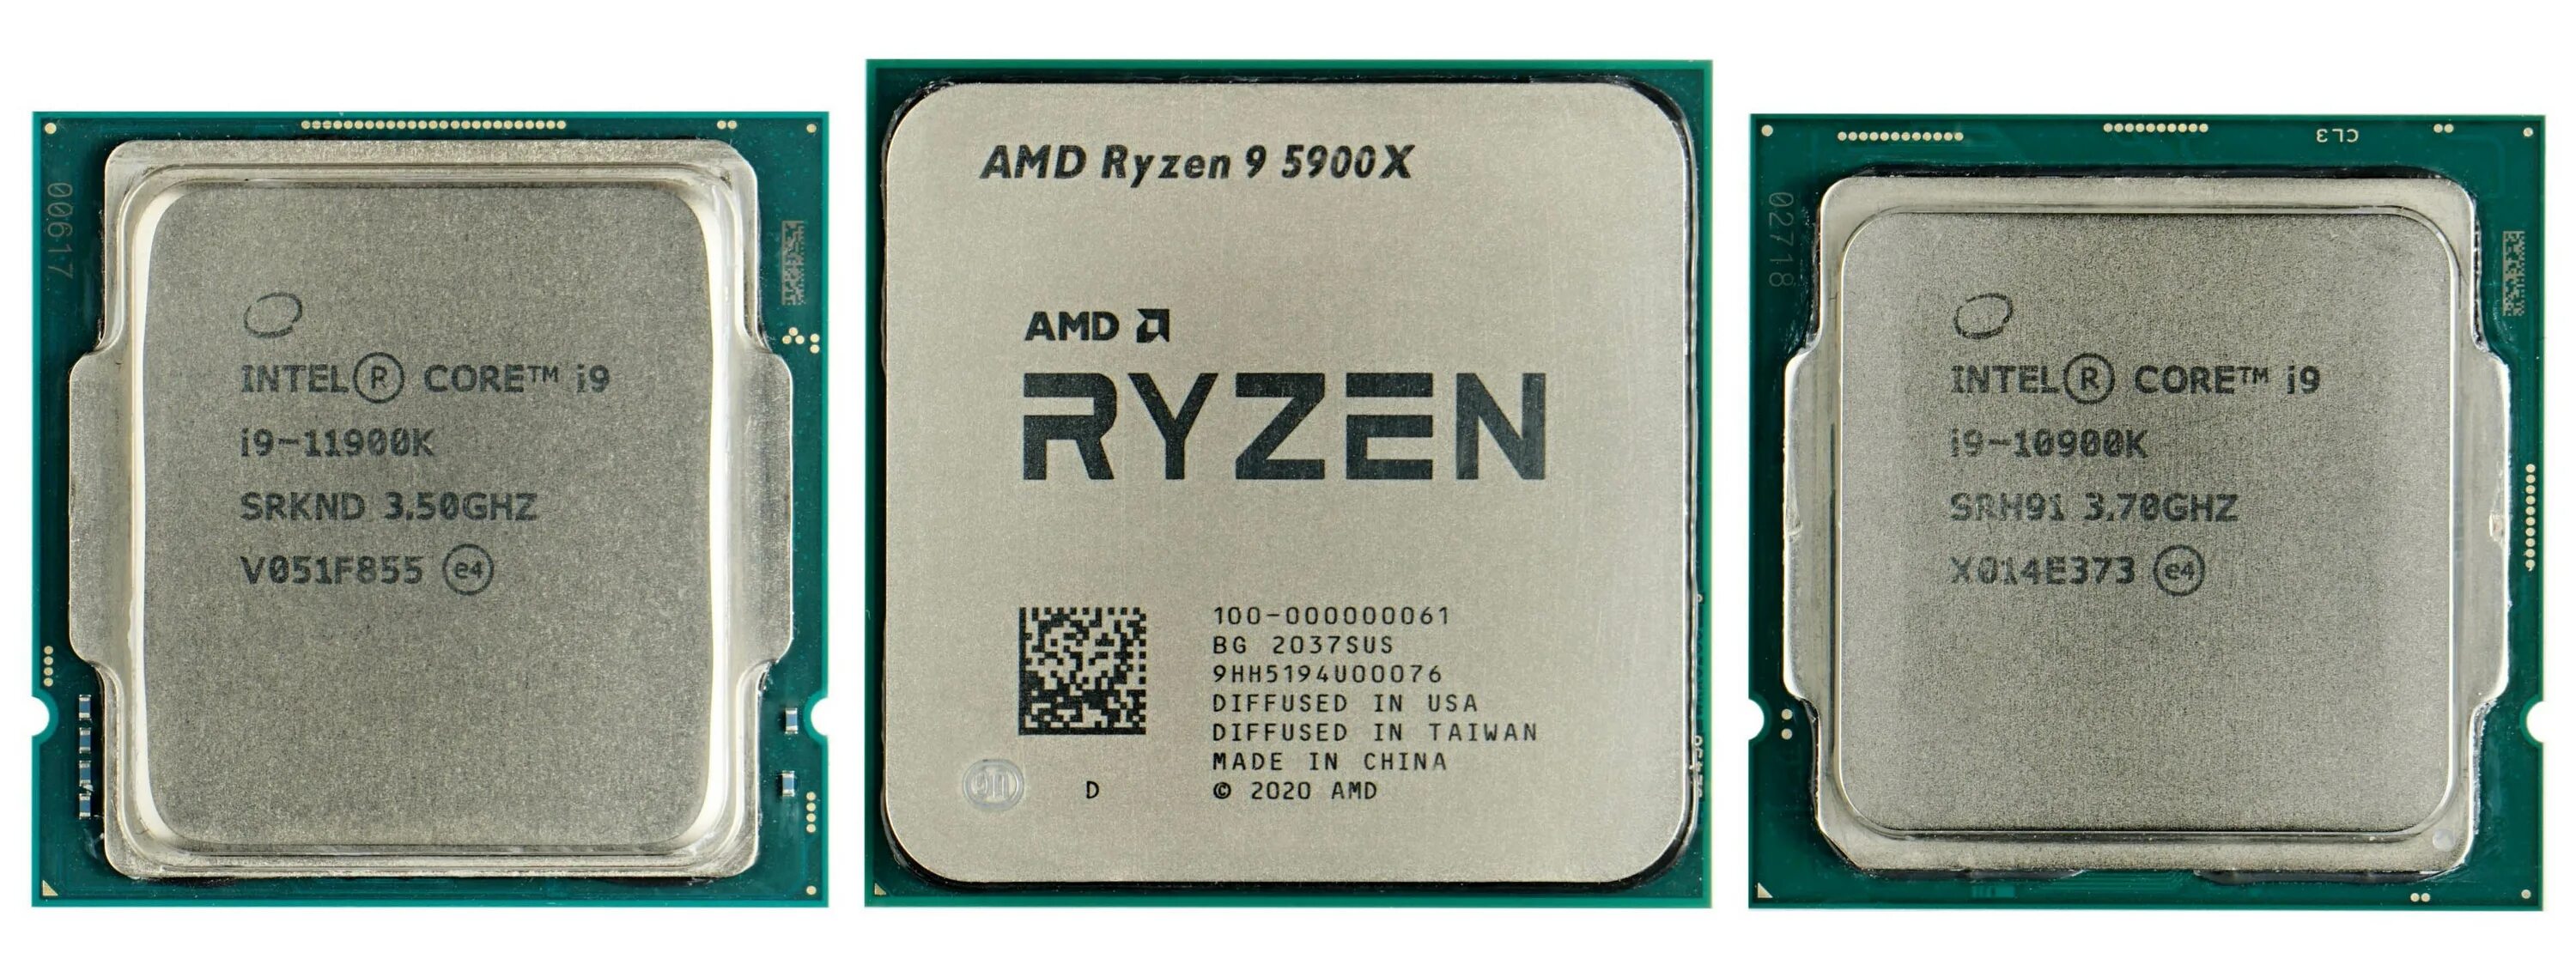 Модели процессоров ryzen. АМД 9 5900х. 5900х Ryzen. CPU AMD Ryzen 9 5900x OEM. Intel Core i9-11900k.